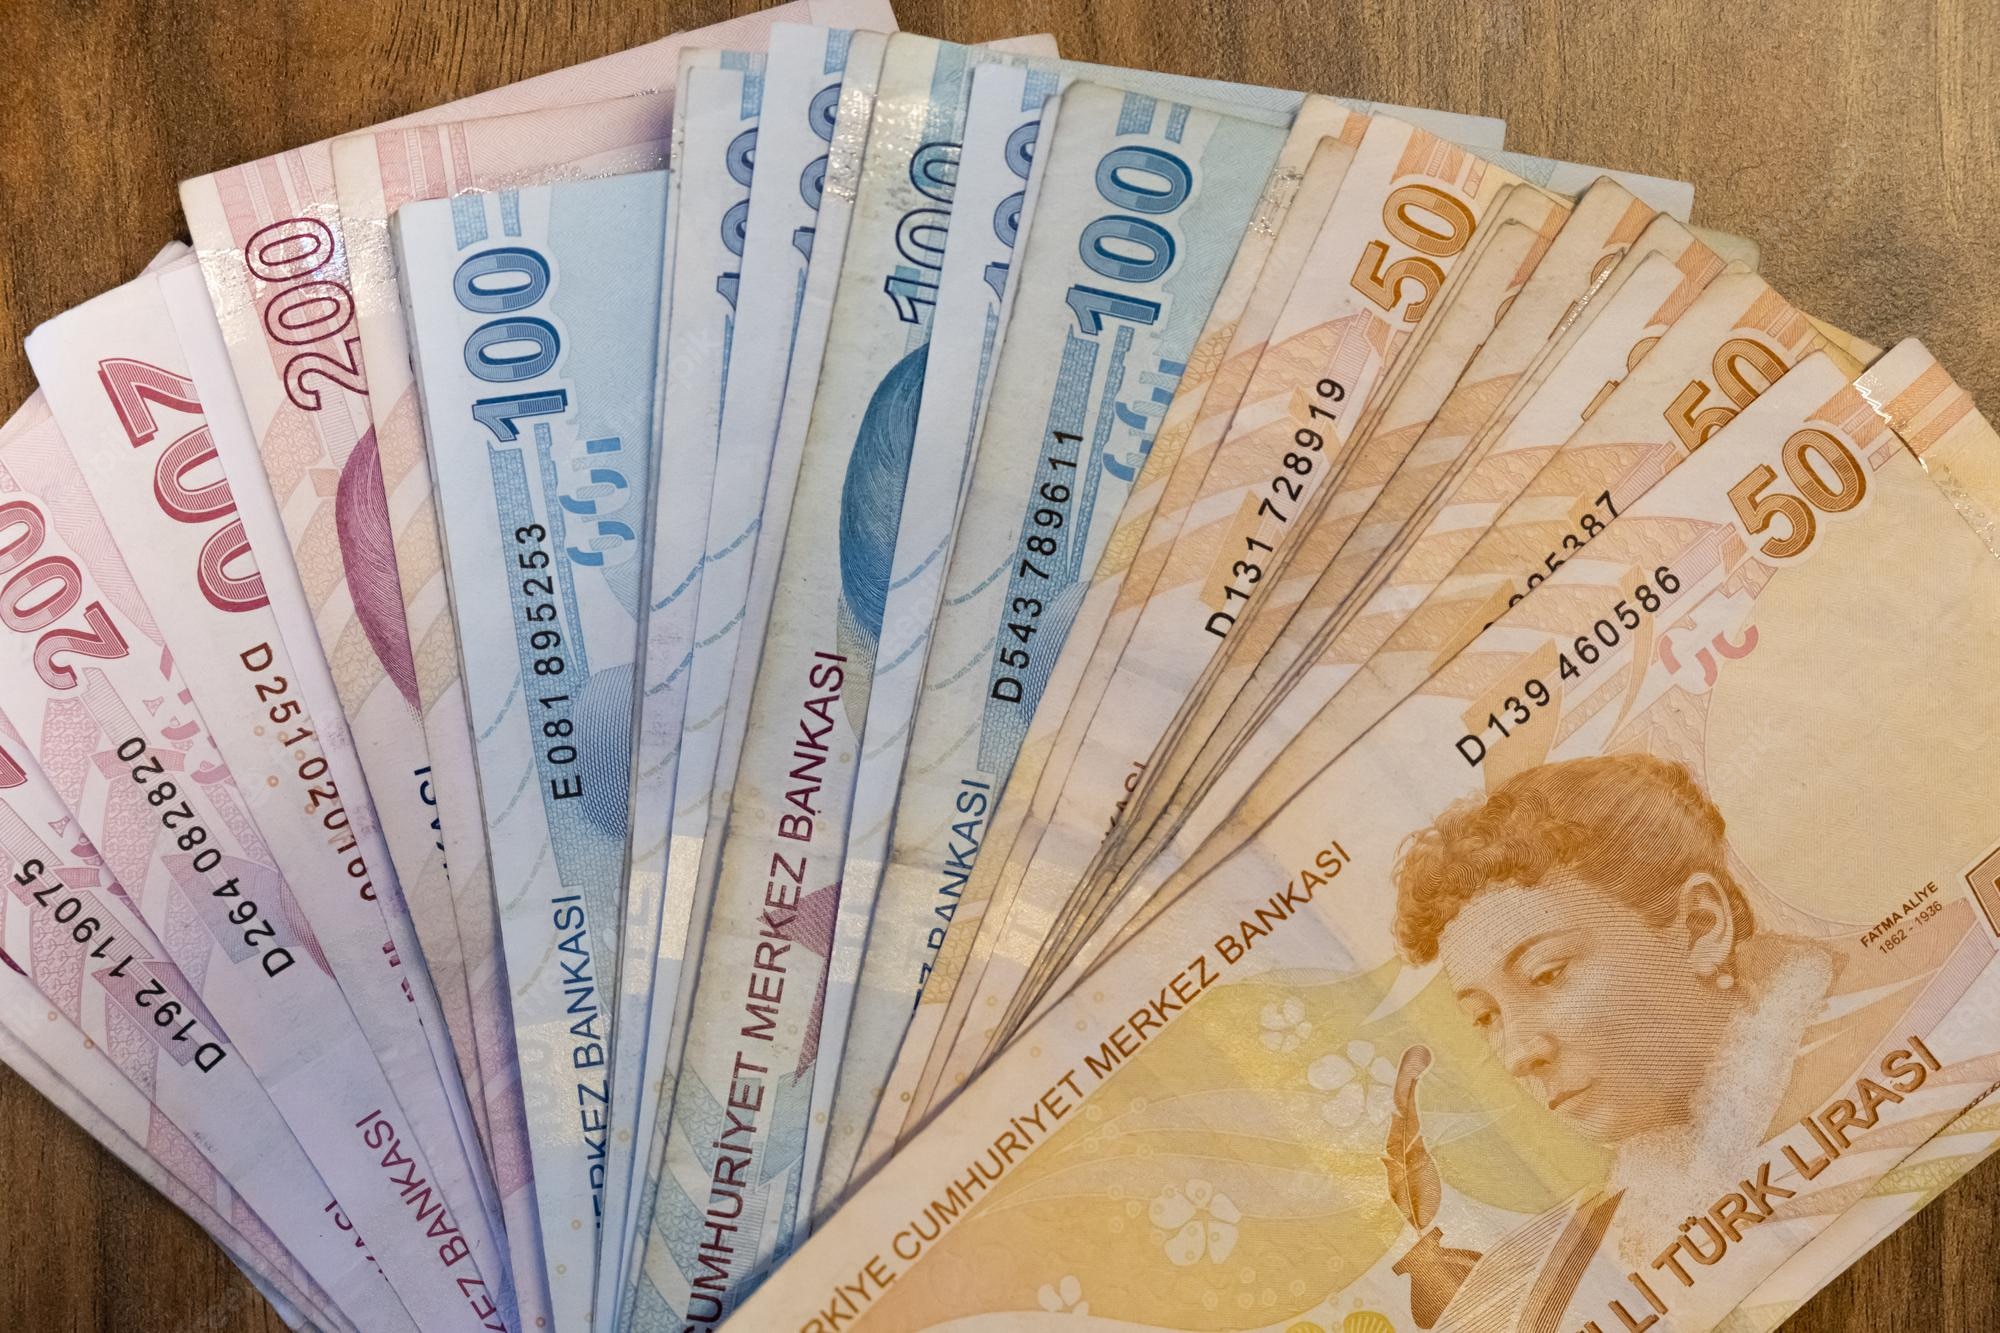 turkish-lira-exchange-currency-banknotes-istanbul-turkey-january-2022_210545-1294